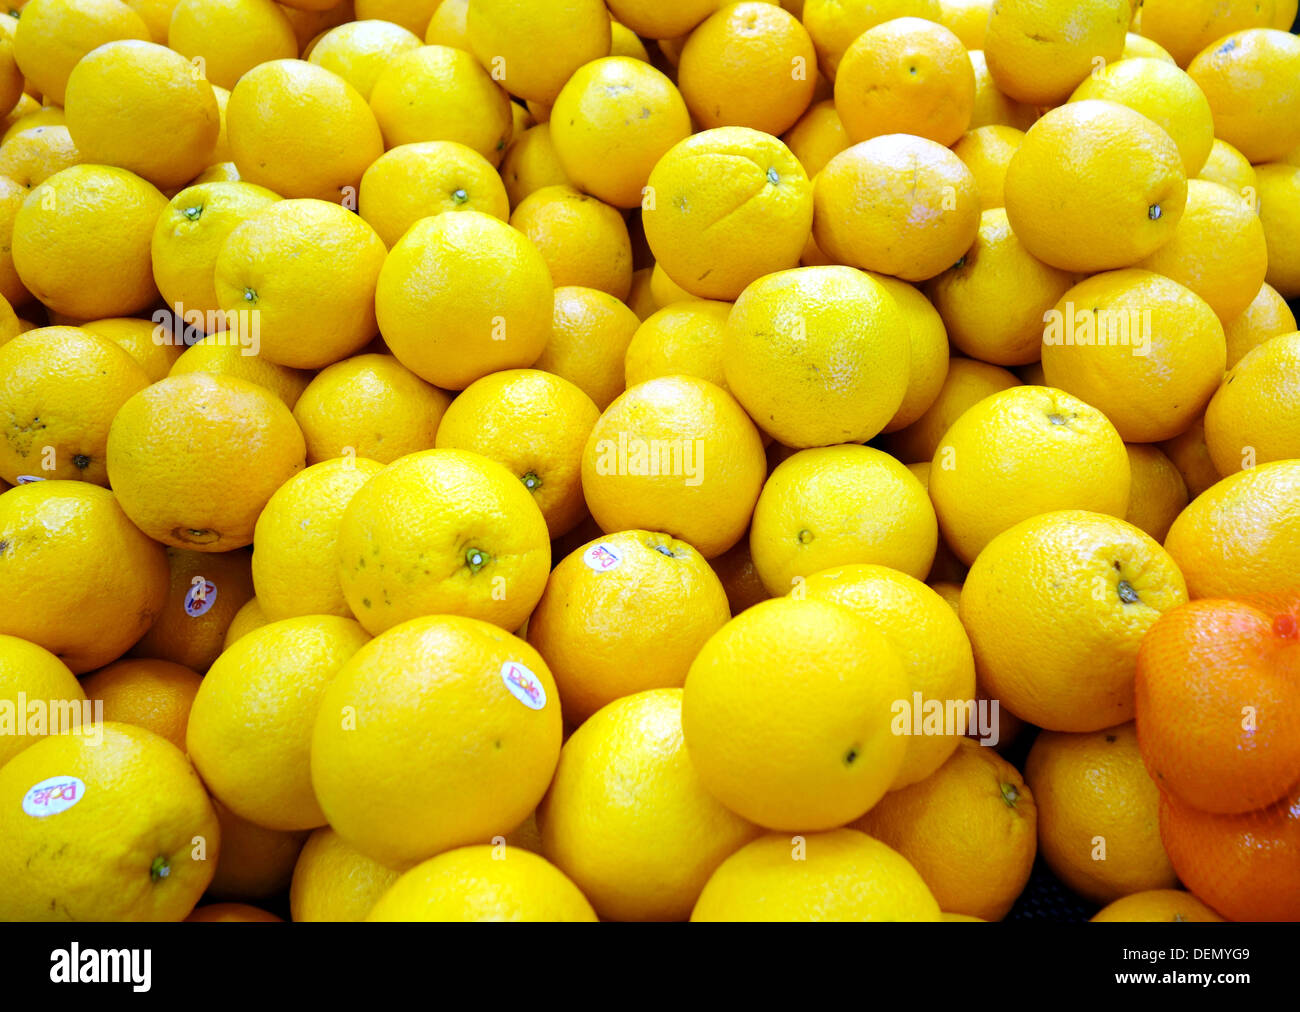 Yellow oranges on a supermarket shelf Stock Photo